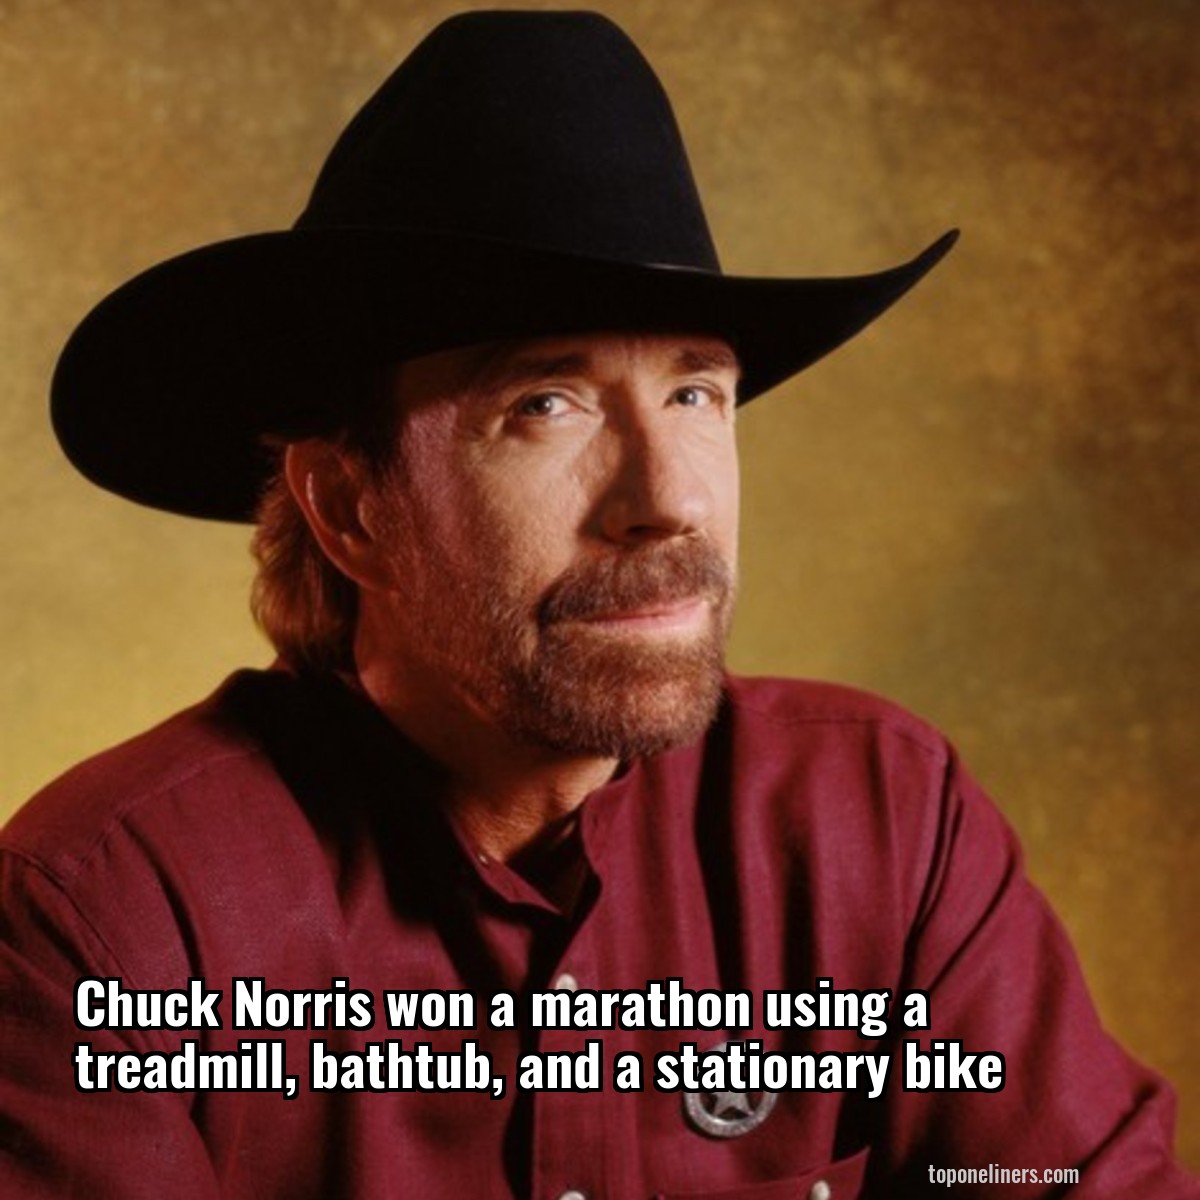 Chuck Norris won a marathon using a treadmill, bathtub, and a stationary bike